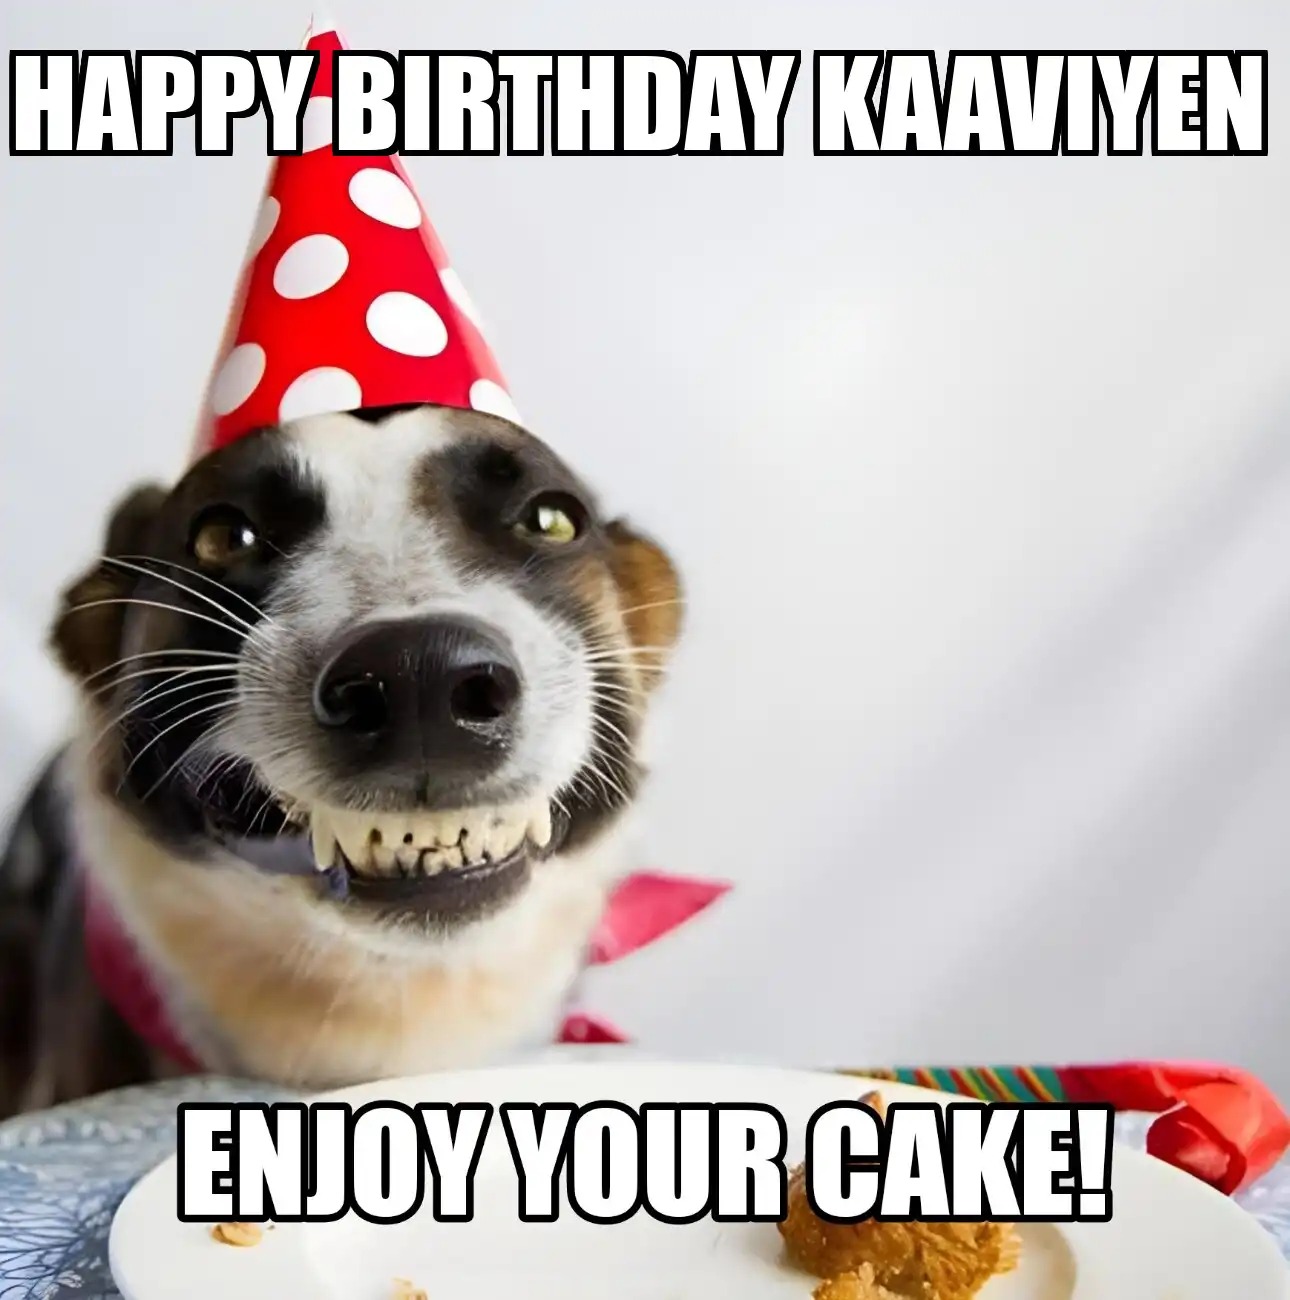 Happy Birthday Kaaviyen Enjoy Your Cake Dog Meme